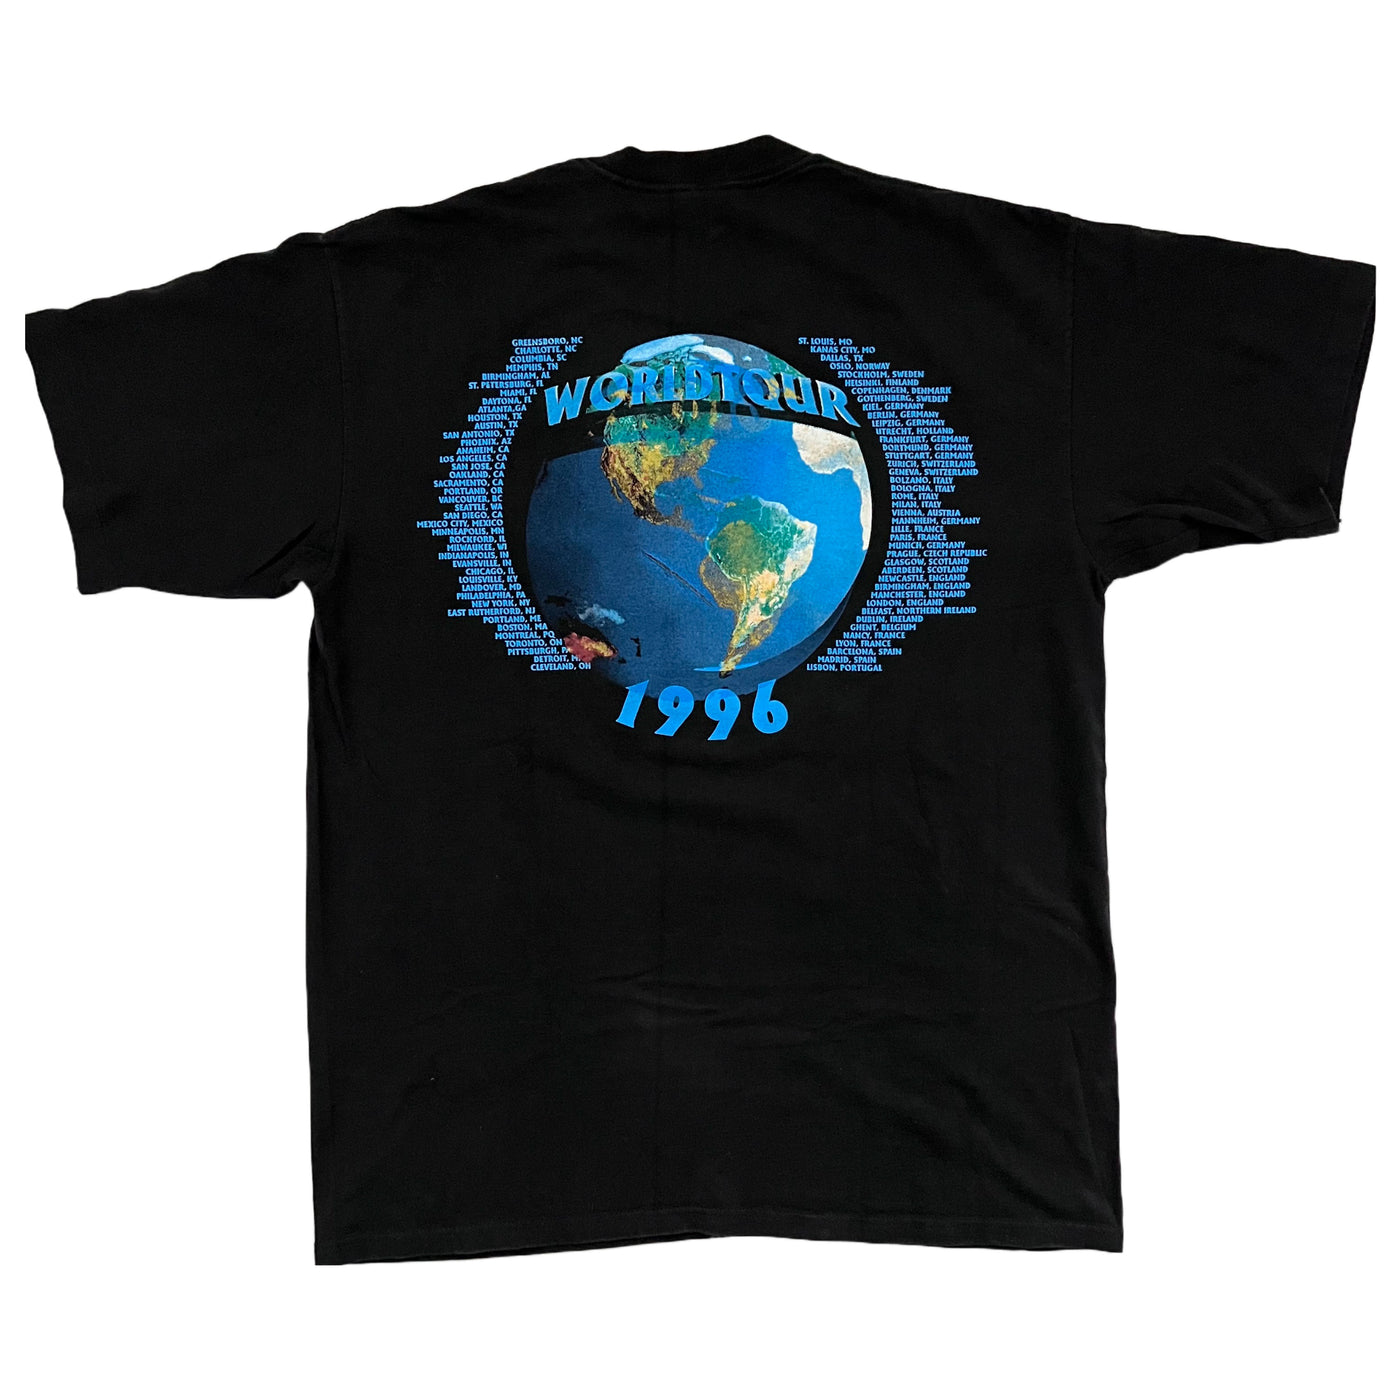 Vintage 1996 AC/DC "BALLBREAKER" Tour T-shirt. Black. XL